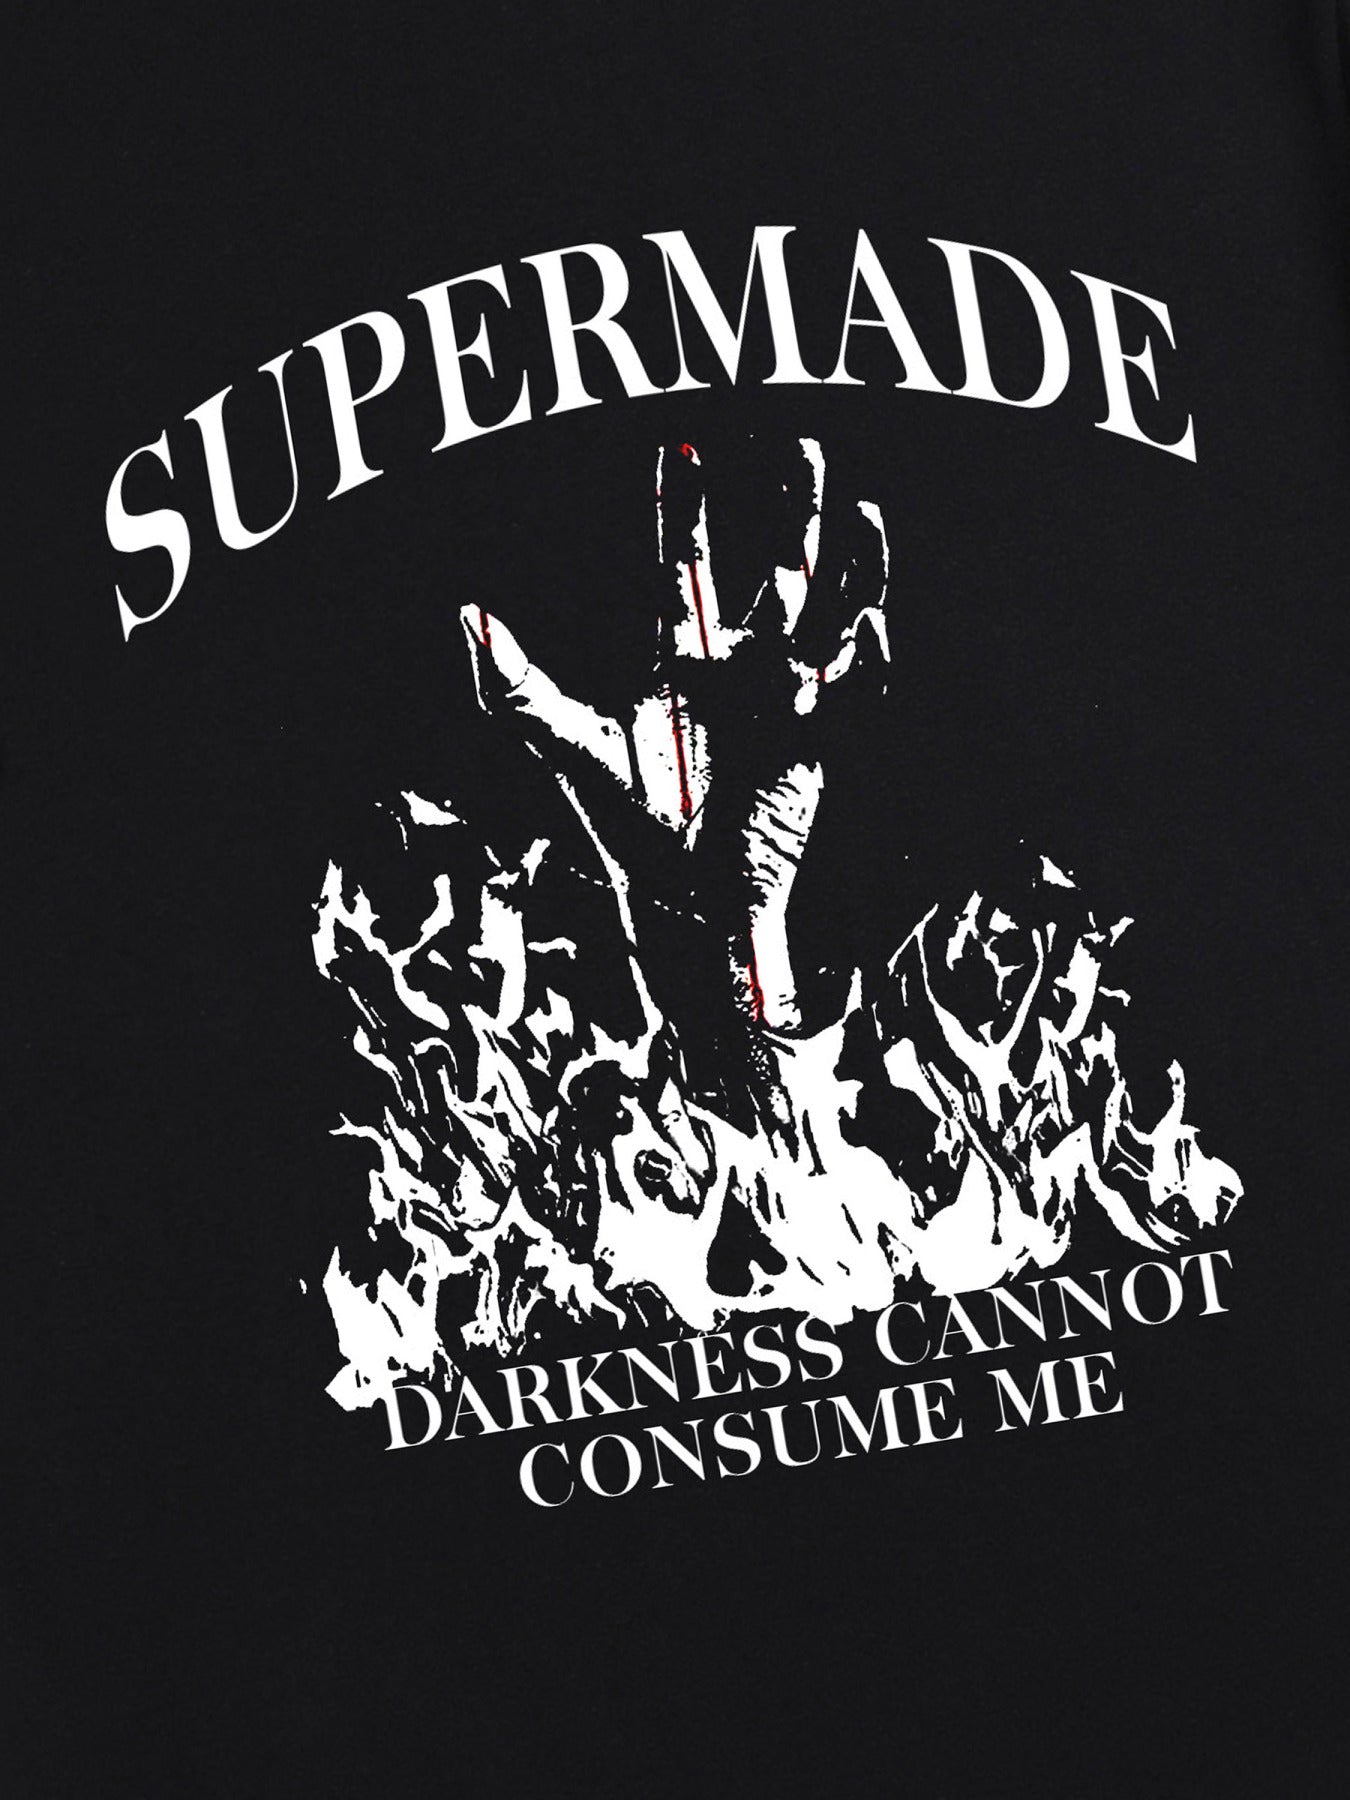 The Supermade Dark Print T-shirt